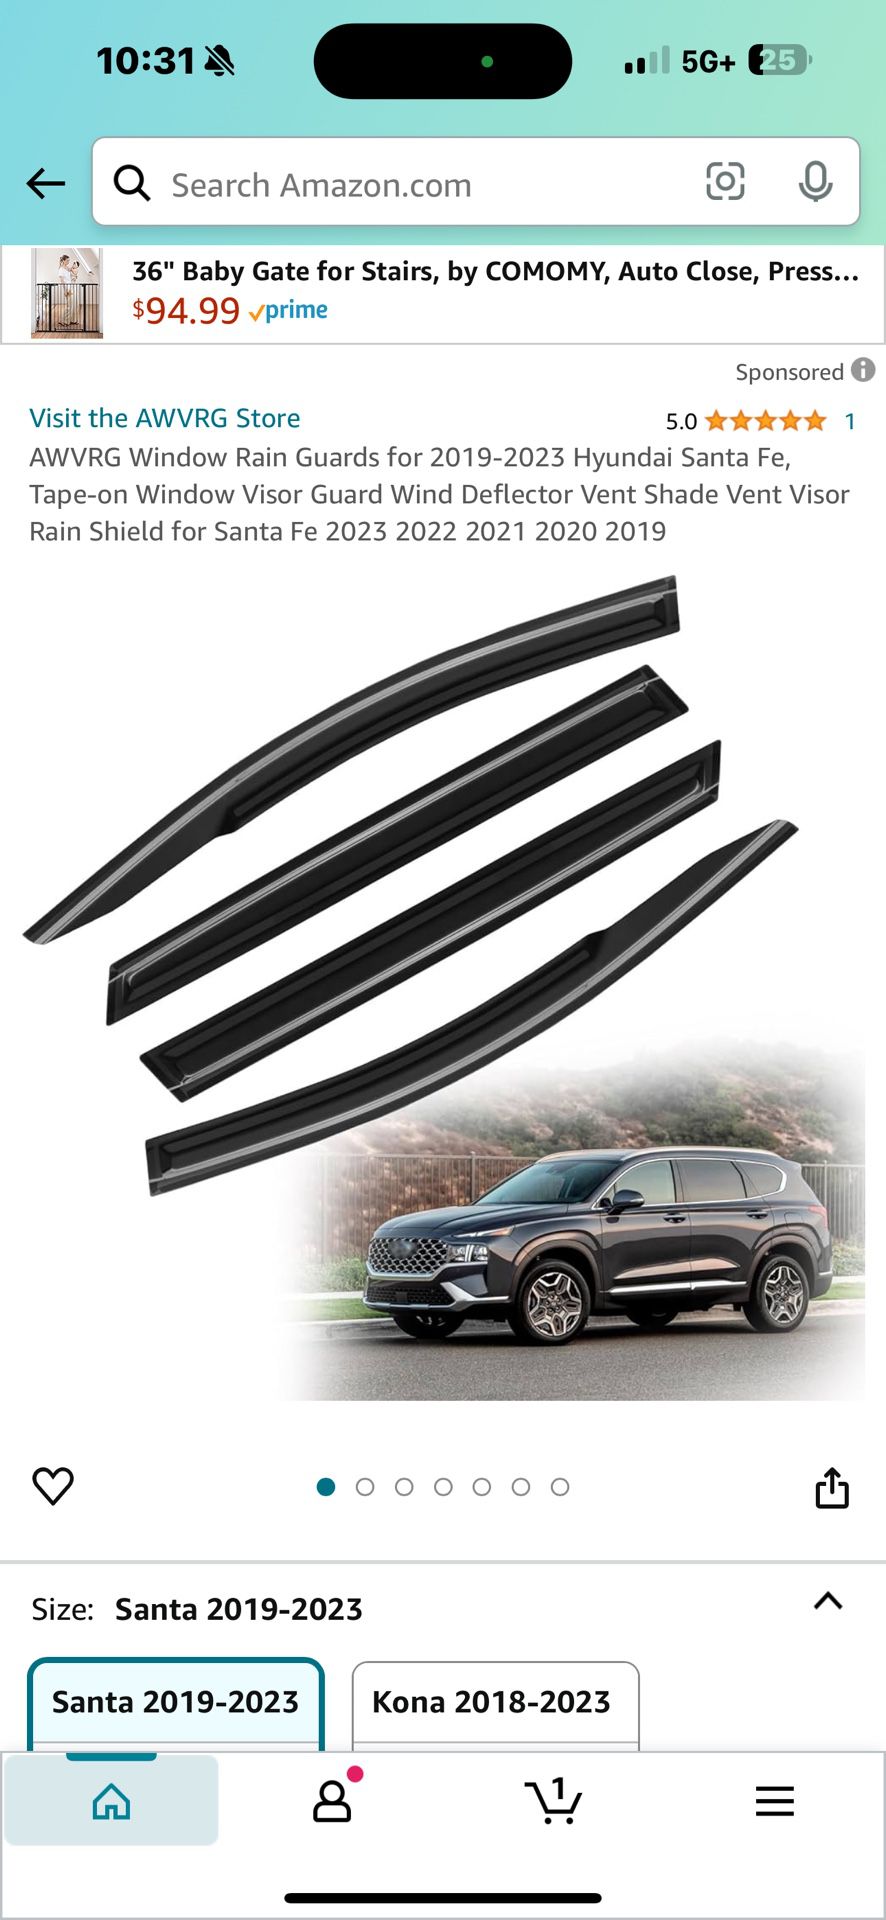 AWVRG Window Rain Guards for 2019-2023 Hyundai Santa Fe, Tape-on Window Visor Guard Wind Deflector Vent Shade Vent Visor Rain Shield for Santa Fe 2023